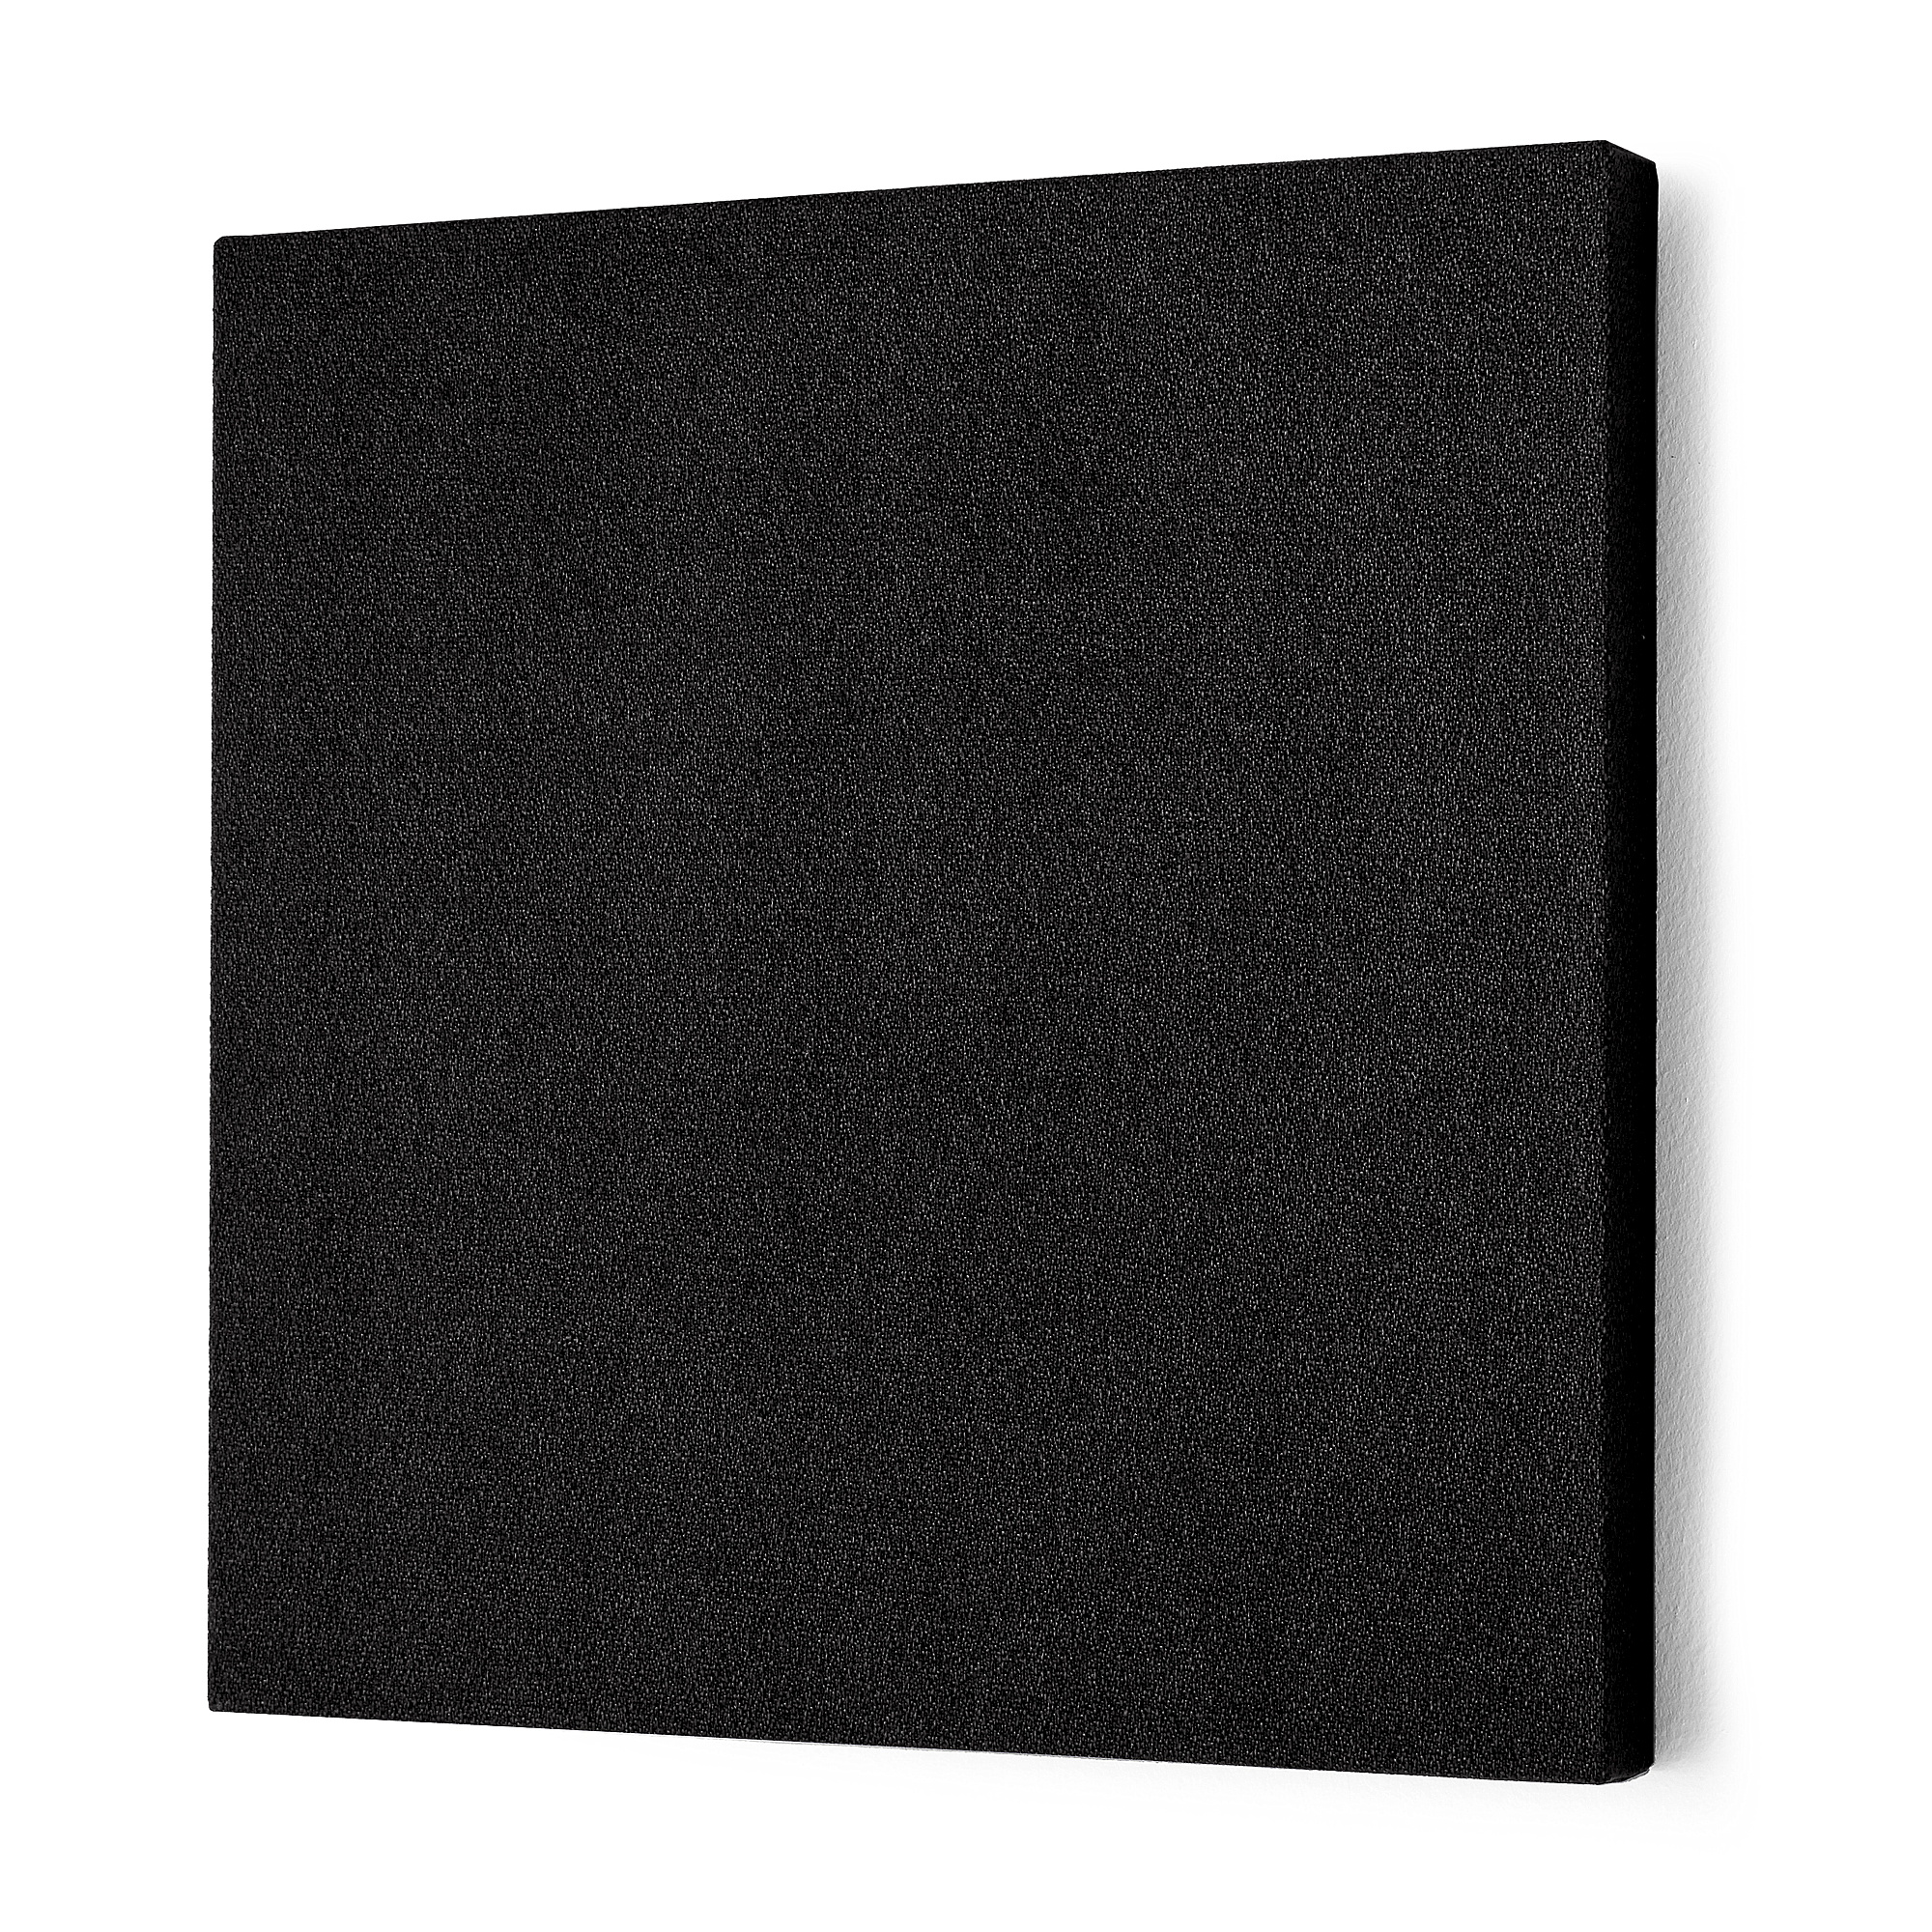 Akustický panel POLY, čtverec, 600x600x56 mm, černý